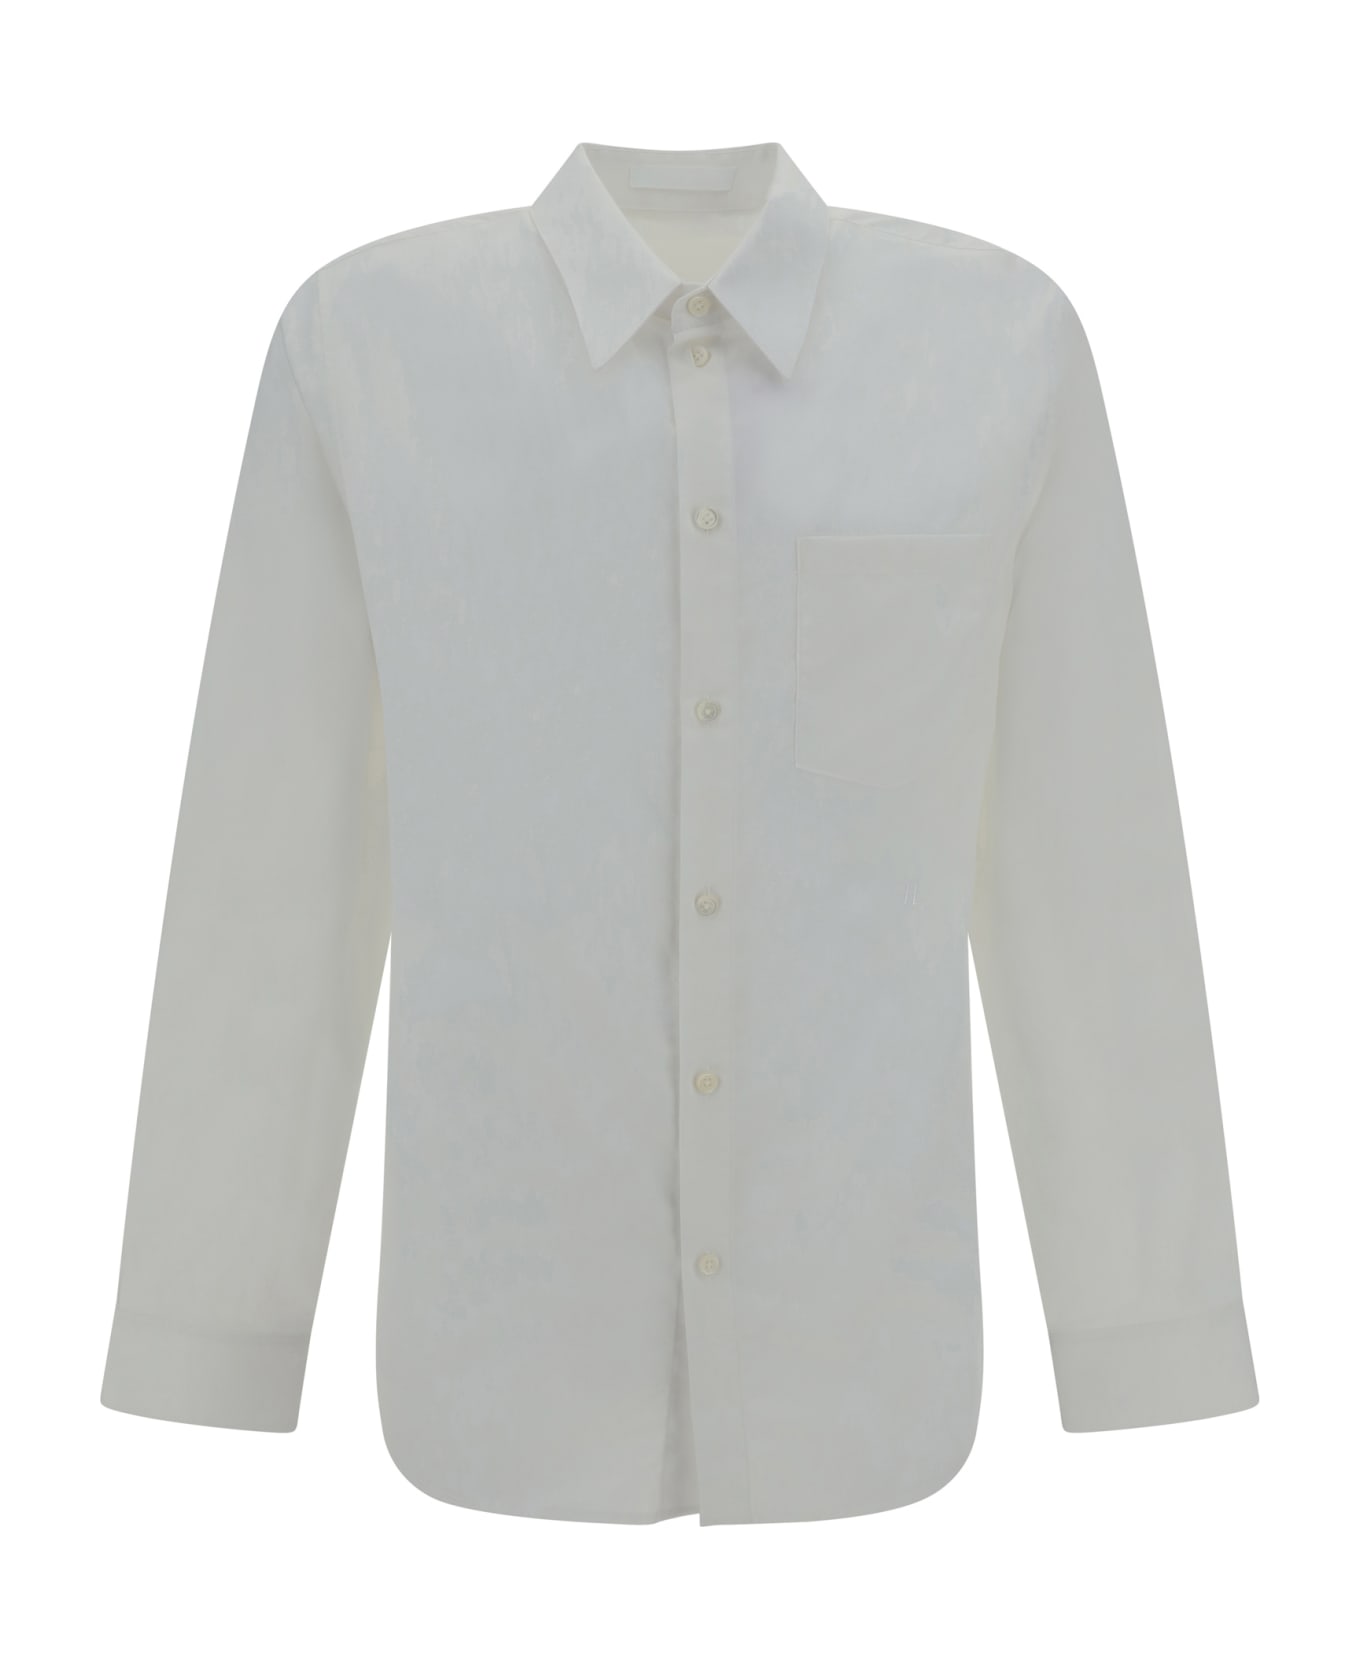 Helmut Lang Shirt - White